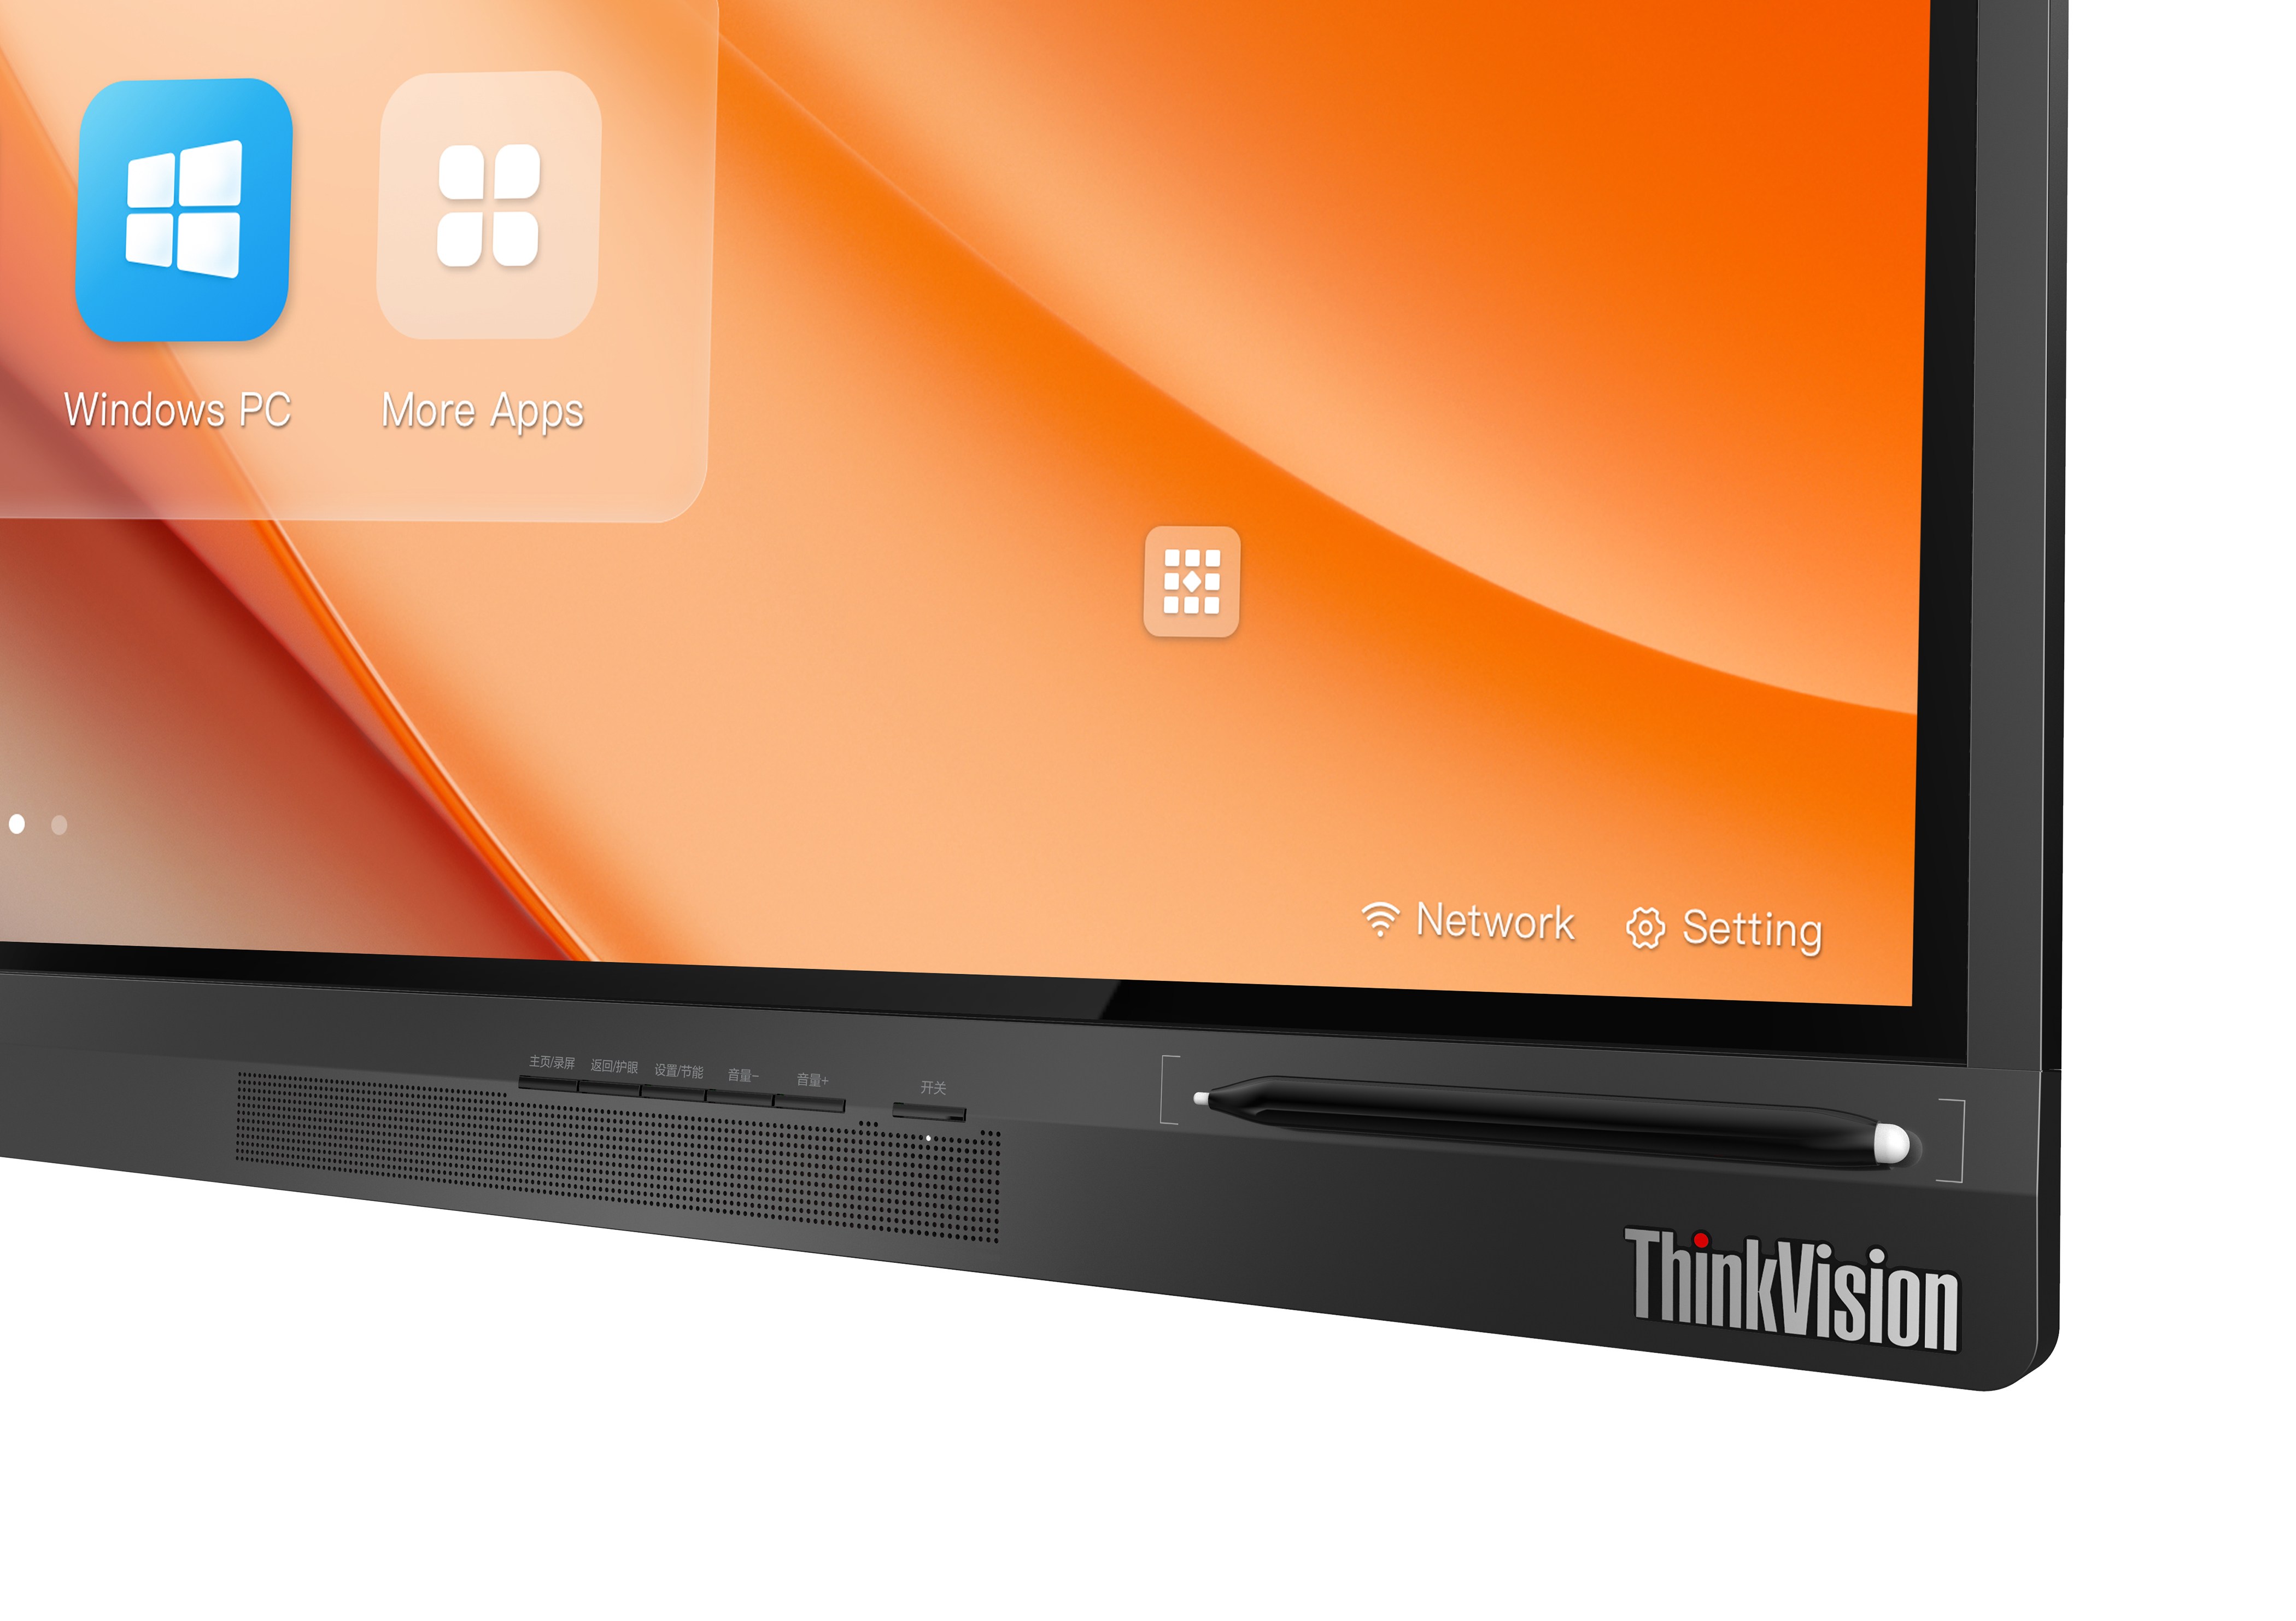 Lenovo ThinkVision interactive display M series